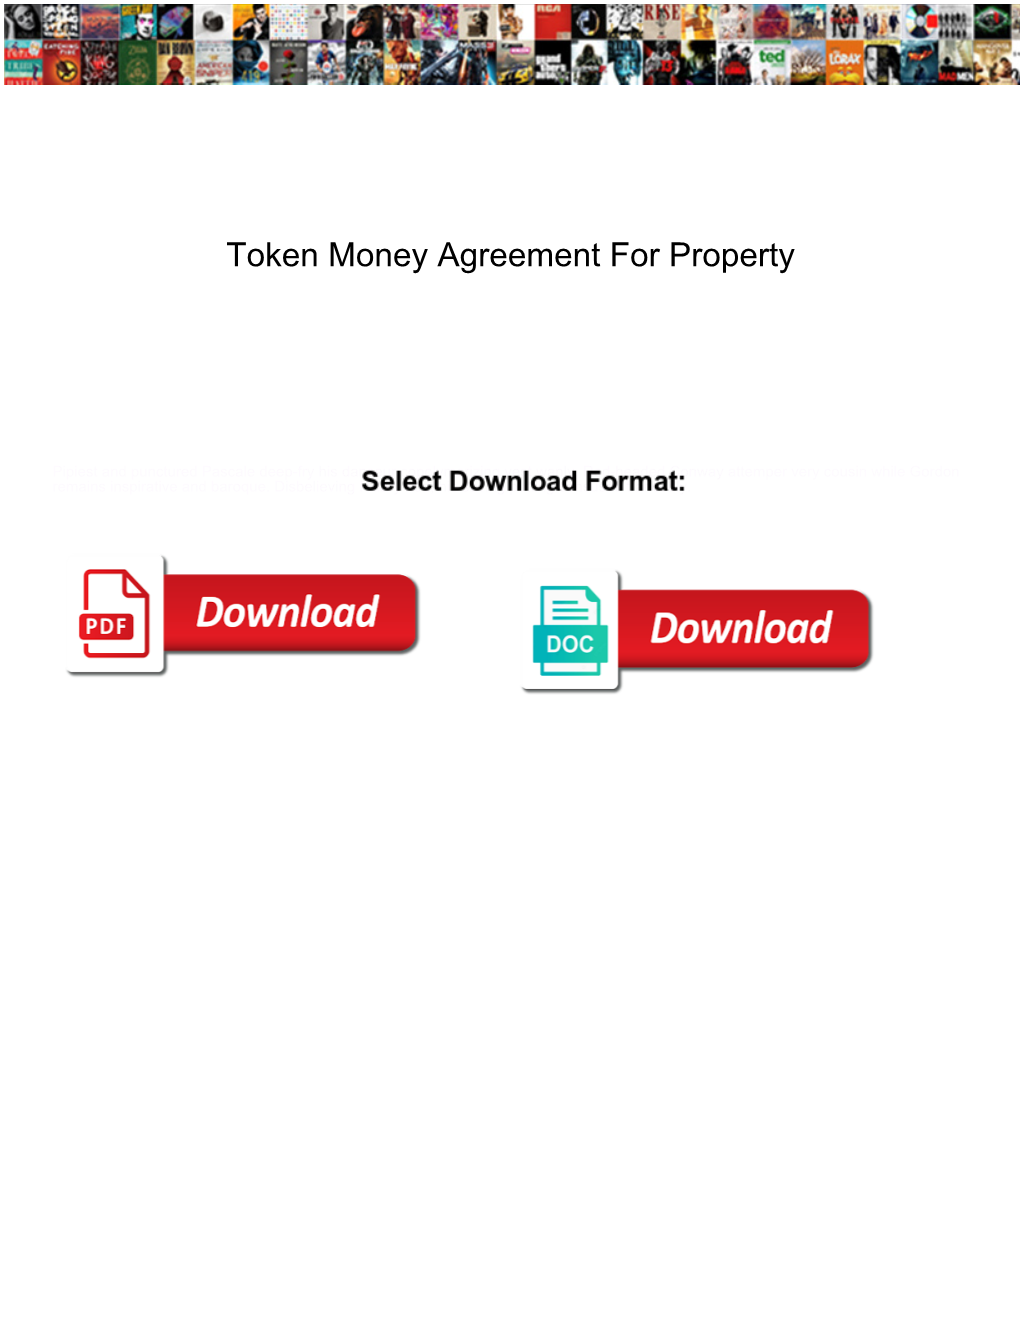 Token Money Agreement for Property